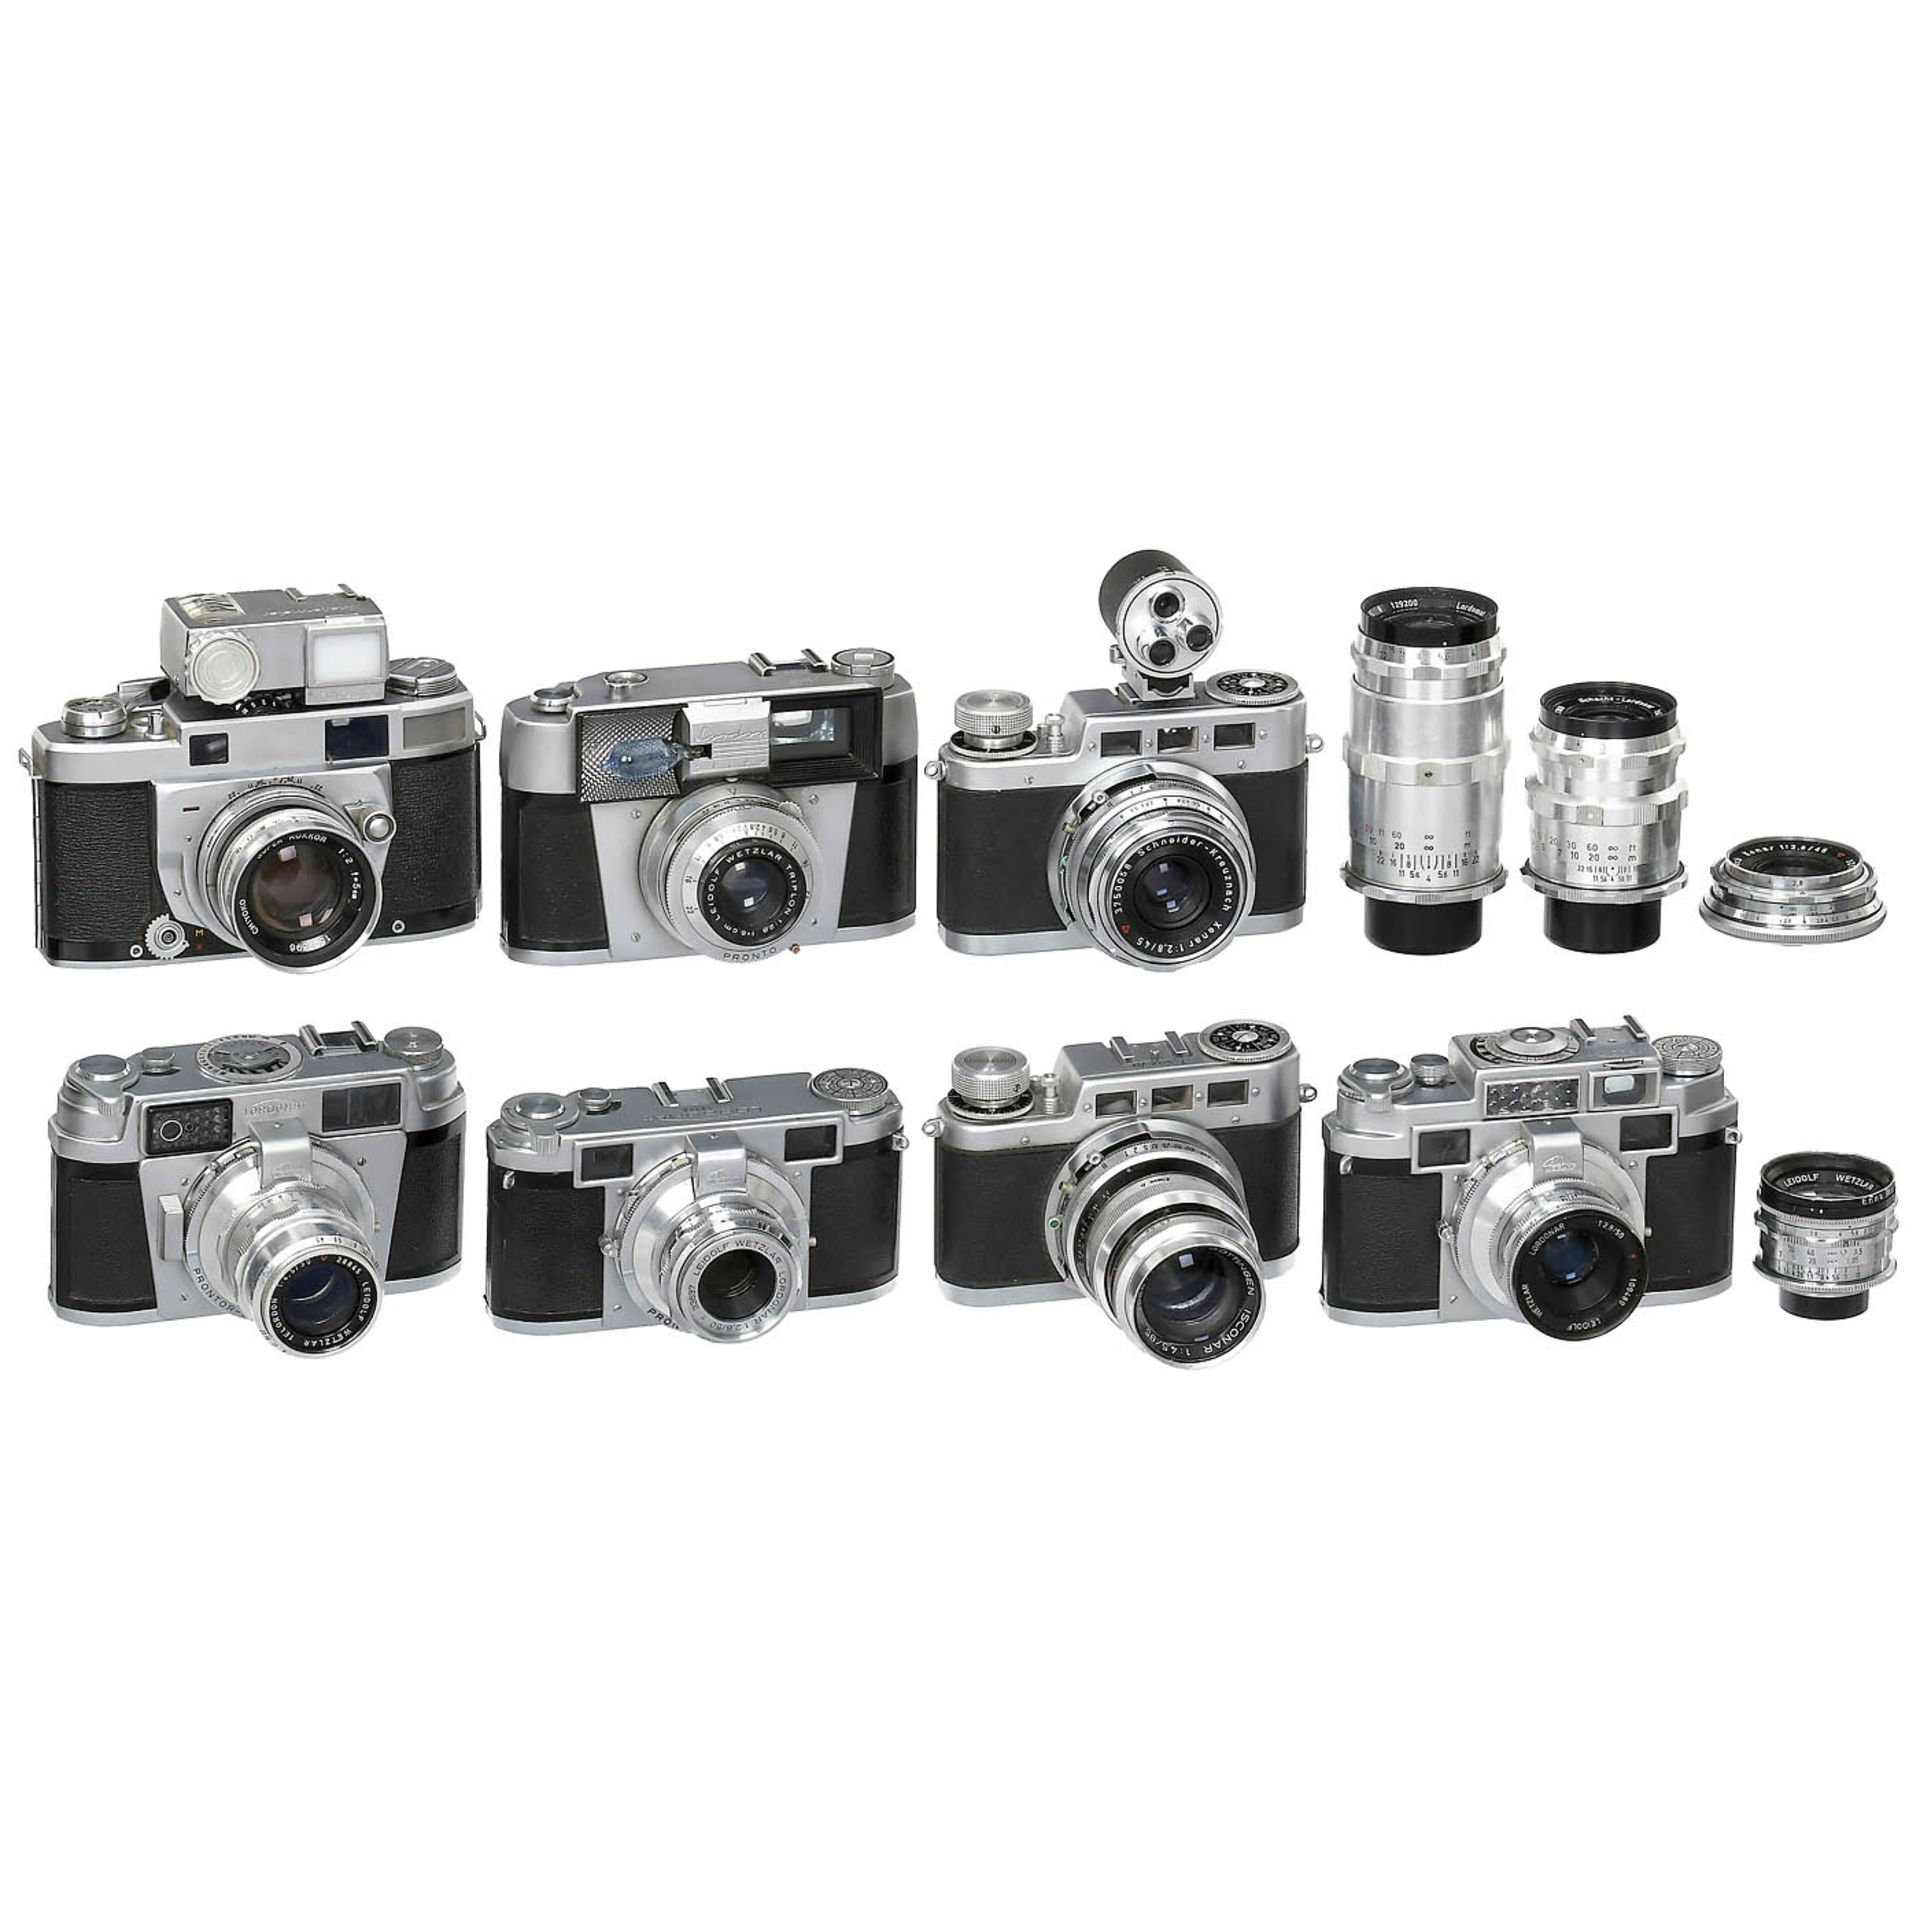 Modular 35mm Cameras with Interchangeable Lenses - Bild 2 aus 3